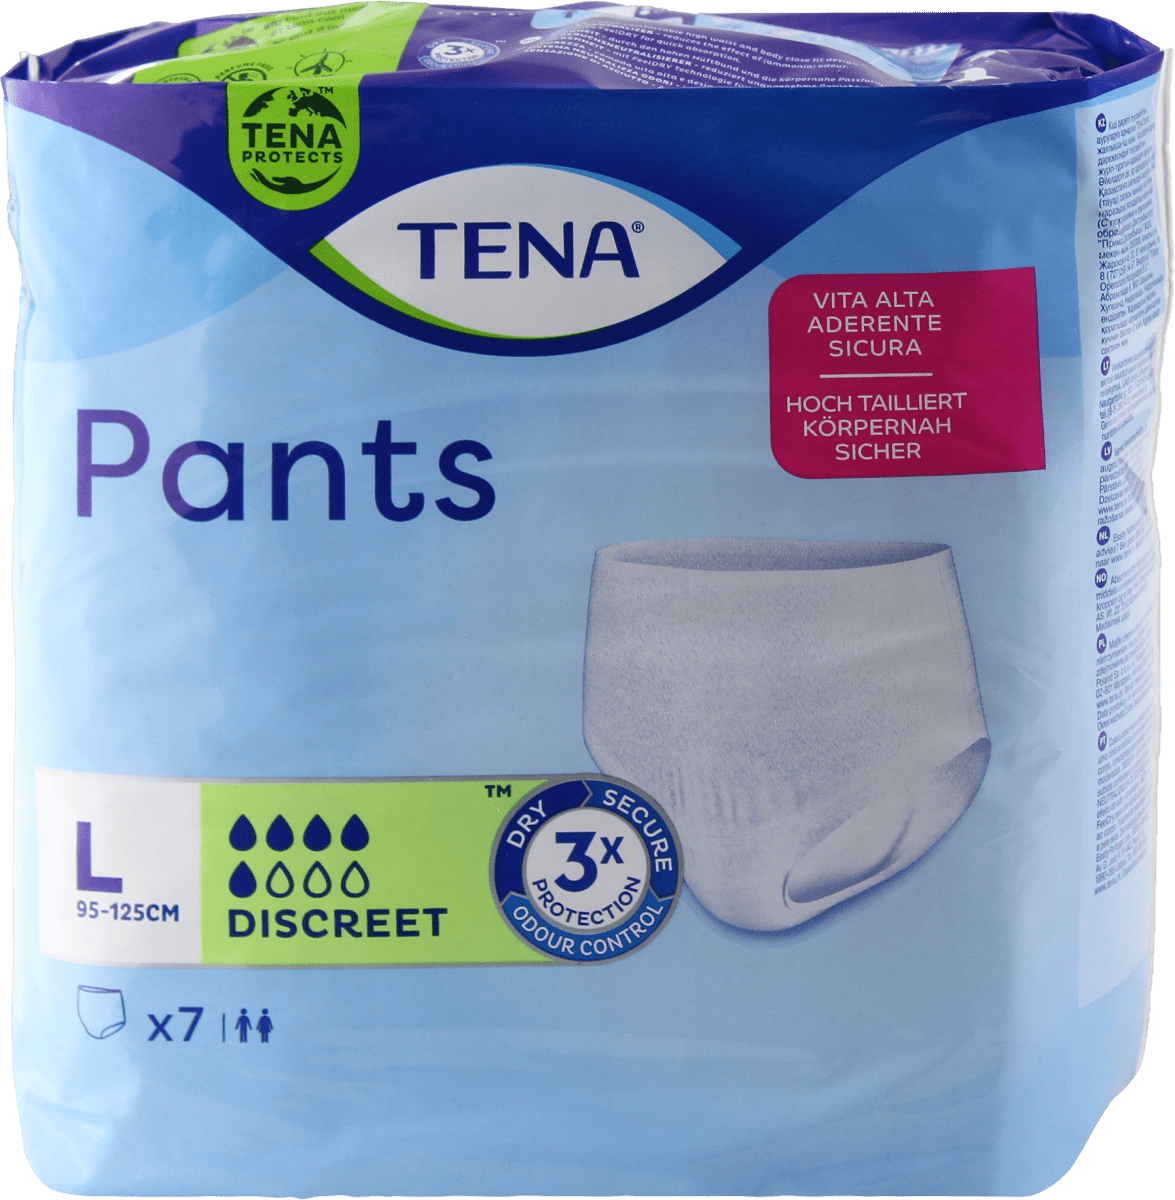 TENA Pants discreet per incontinenza taglia L, 7 pz Acquisti